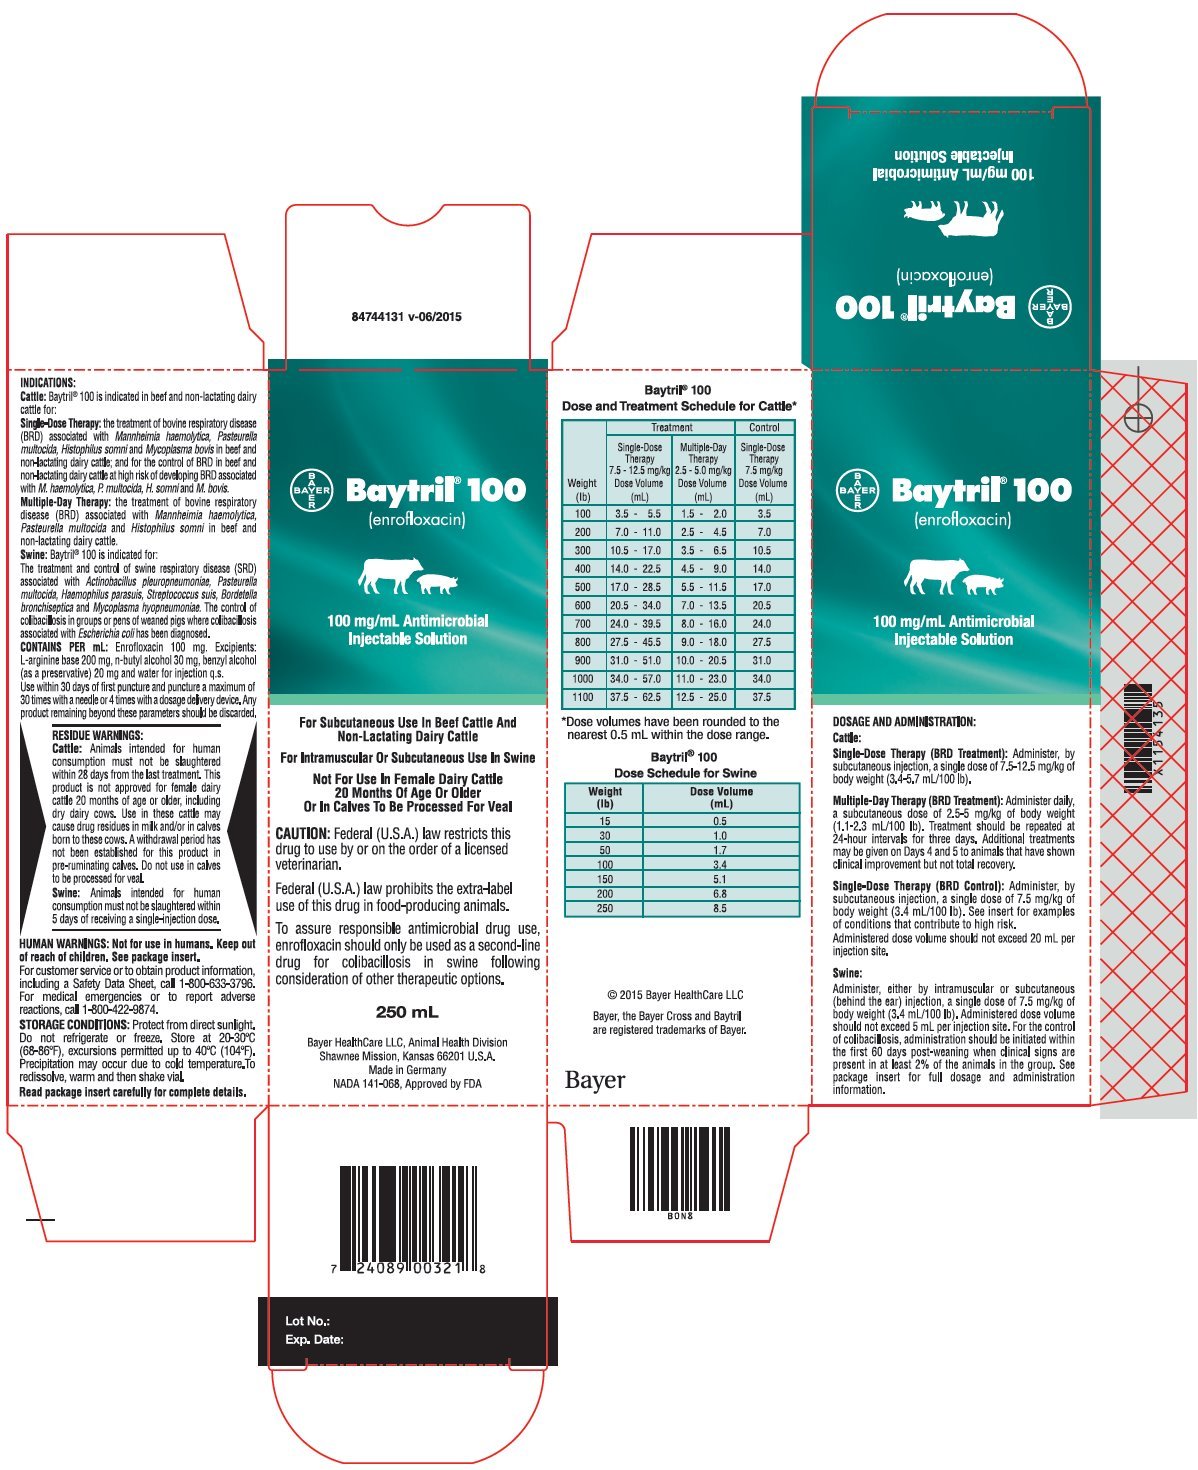 Baytril 100 (enrofloxacin) 100 mg/mL Antimicrobial Injectable Solution 250 mL Carton Label